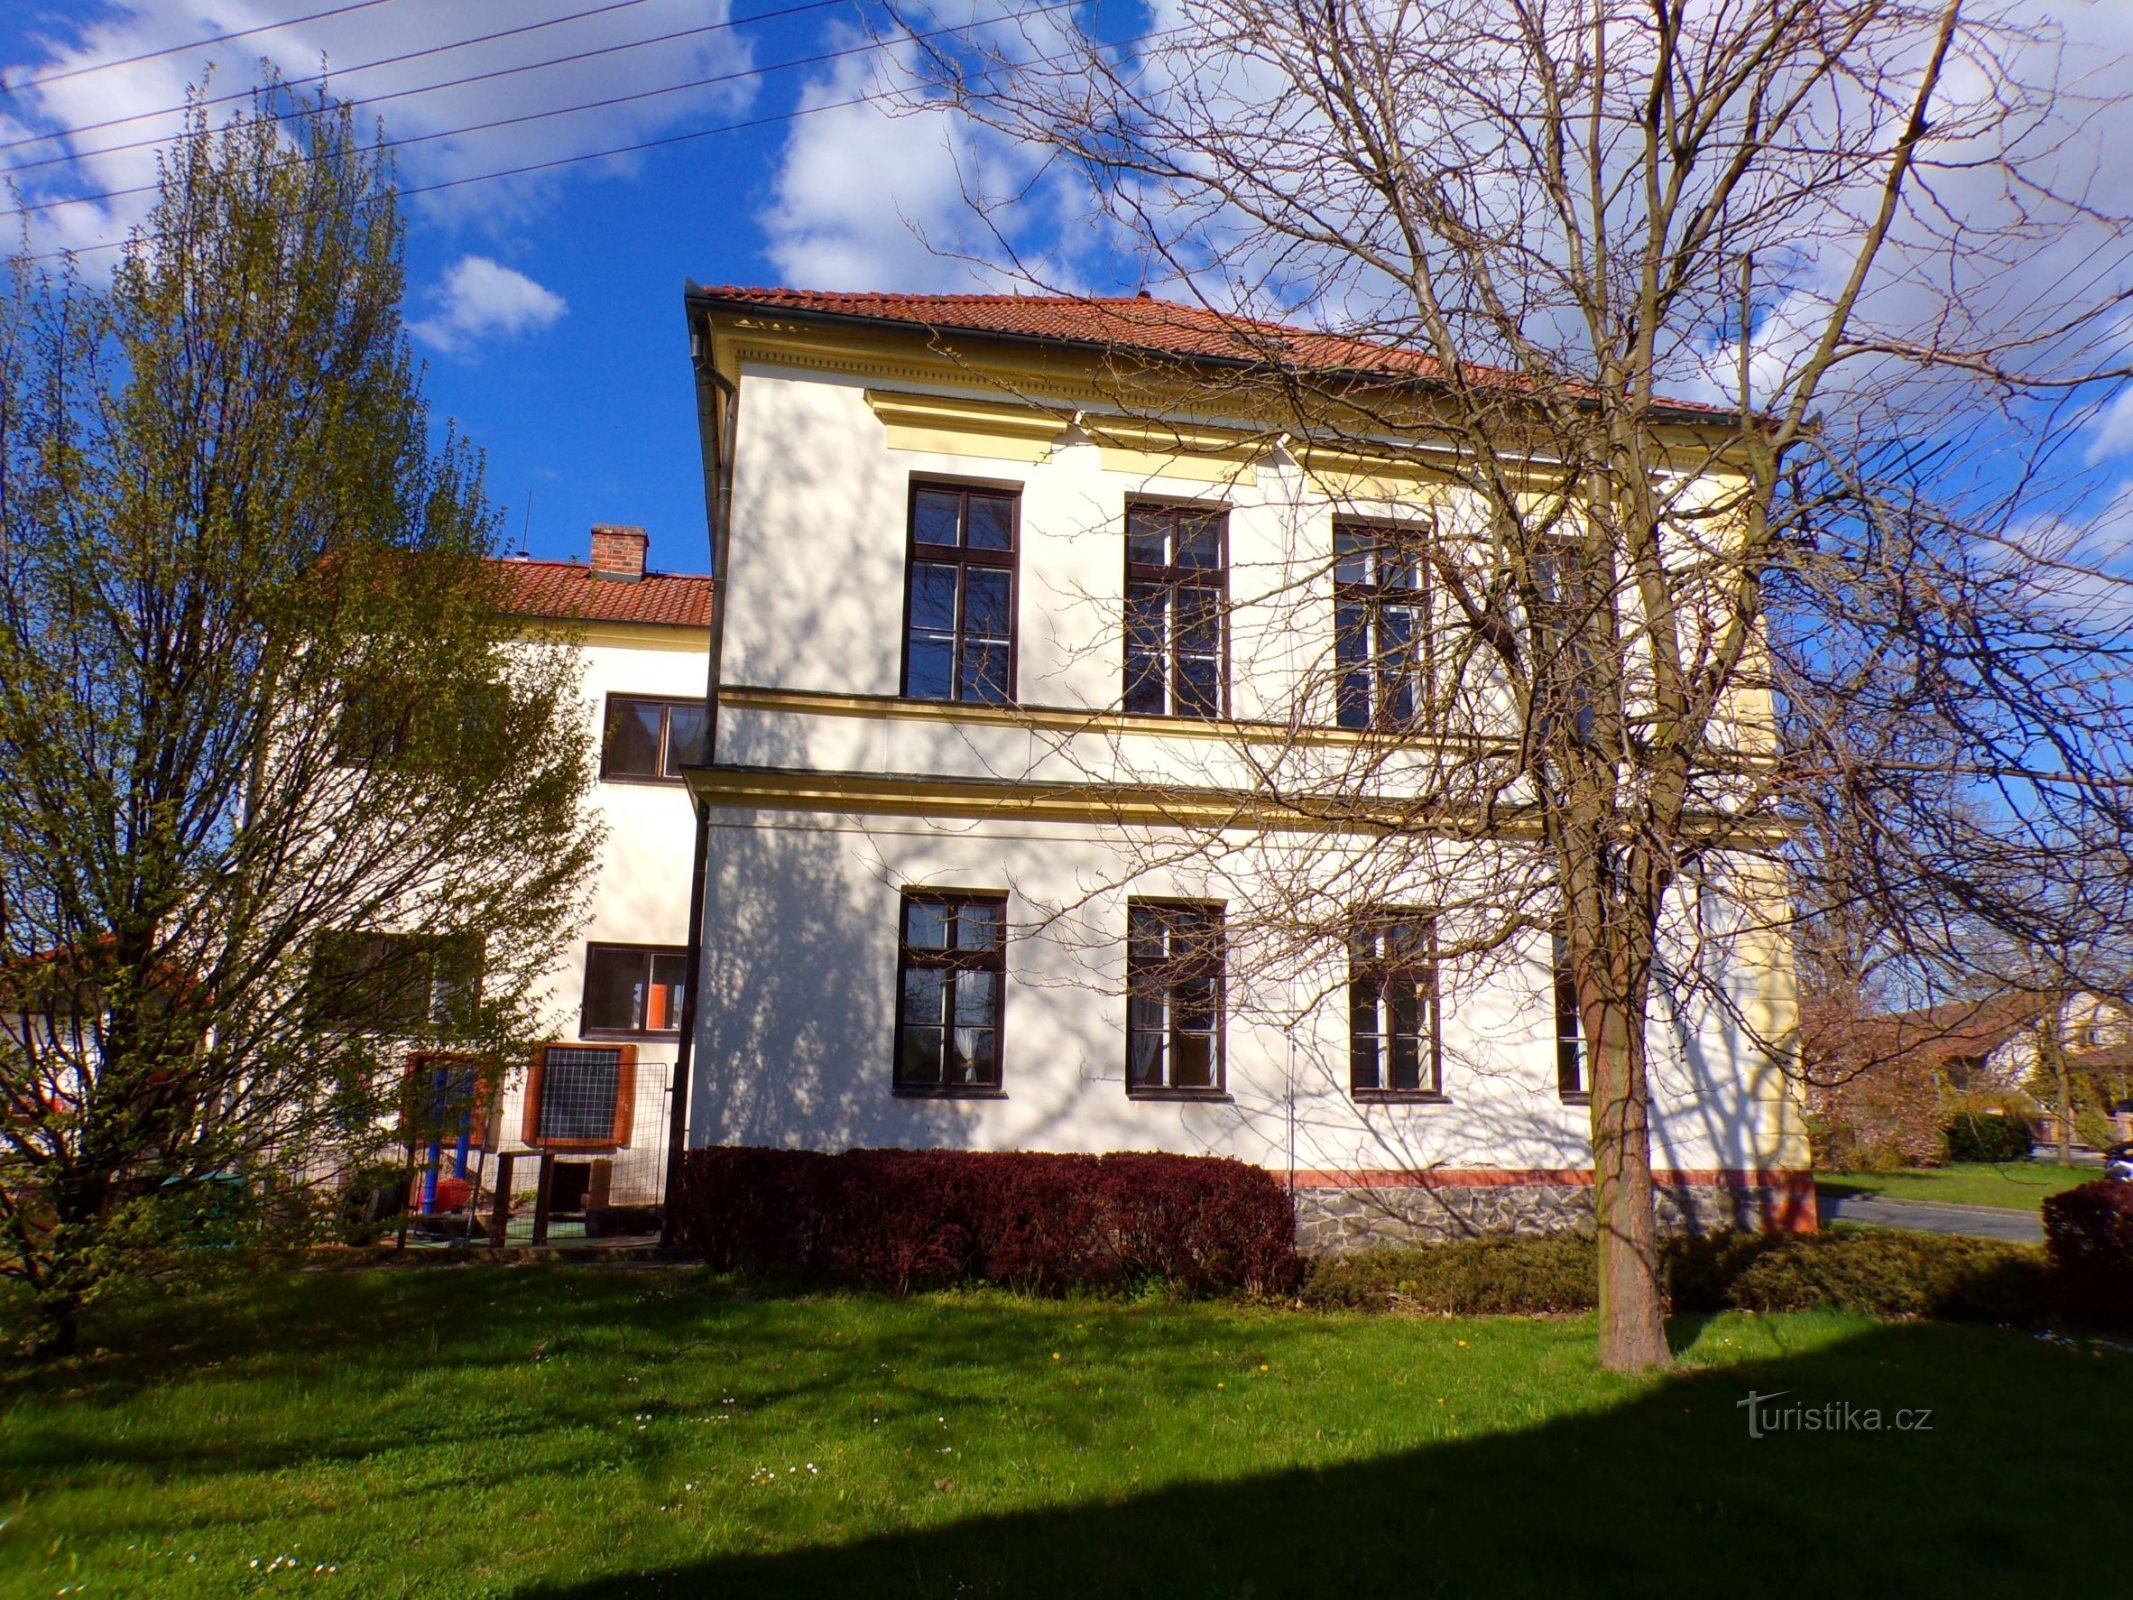 École à Rosice nad Labem (Pardubice, 23.4.2022/XNUMX/XNUMX)